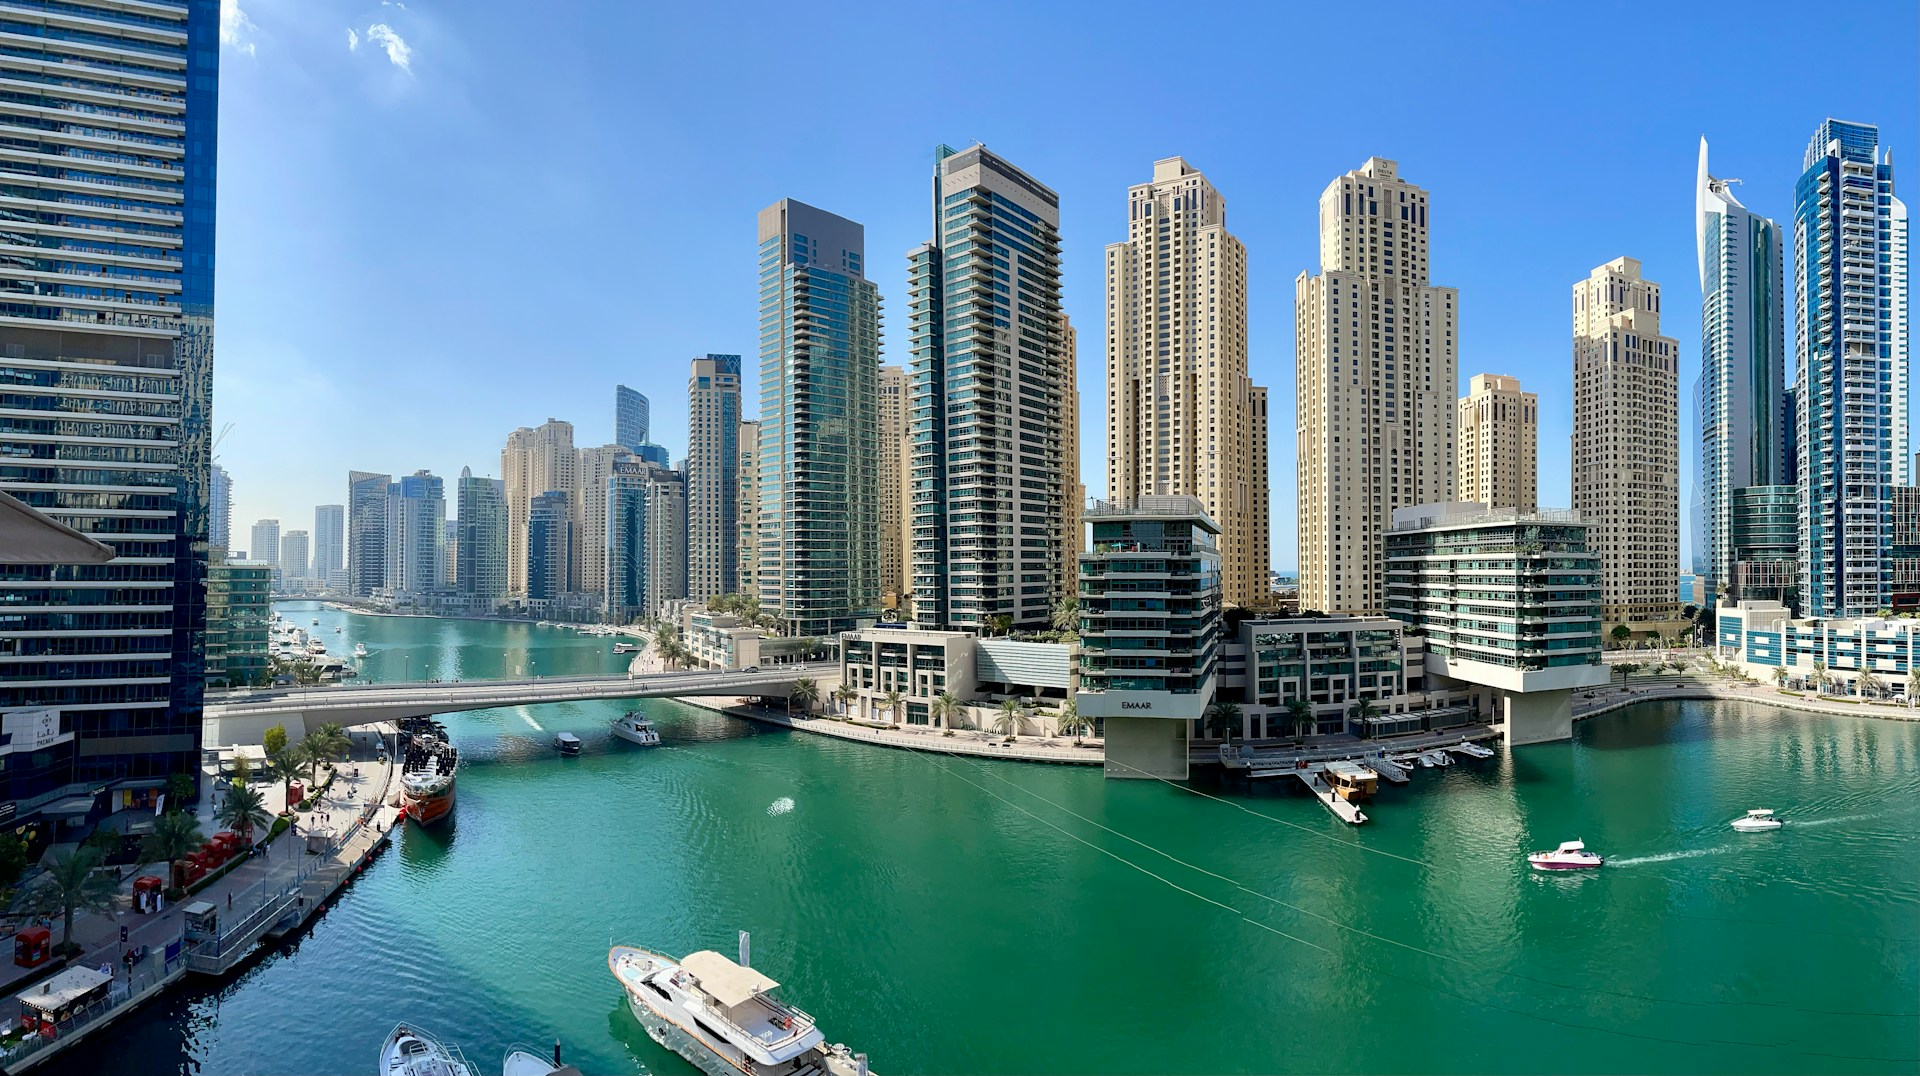 A gorgeous shot of the Dubai Marina on a beautiful day